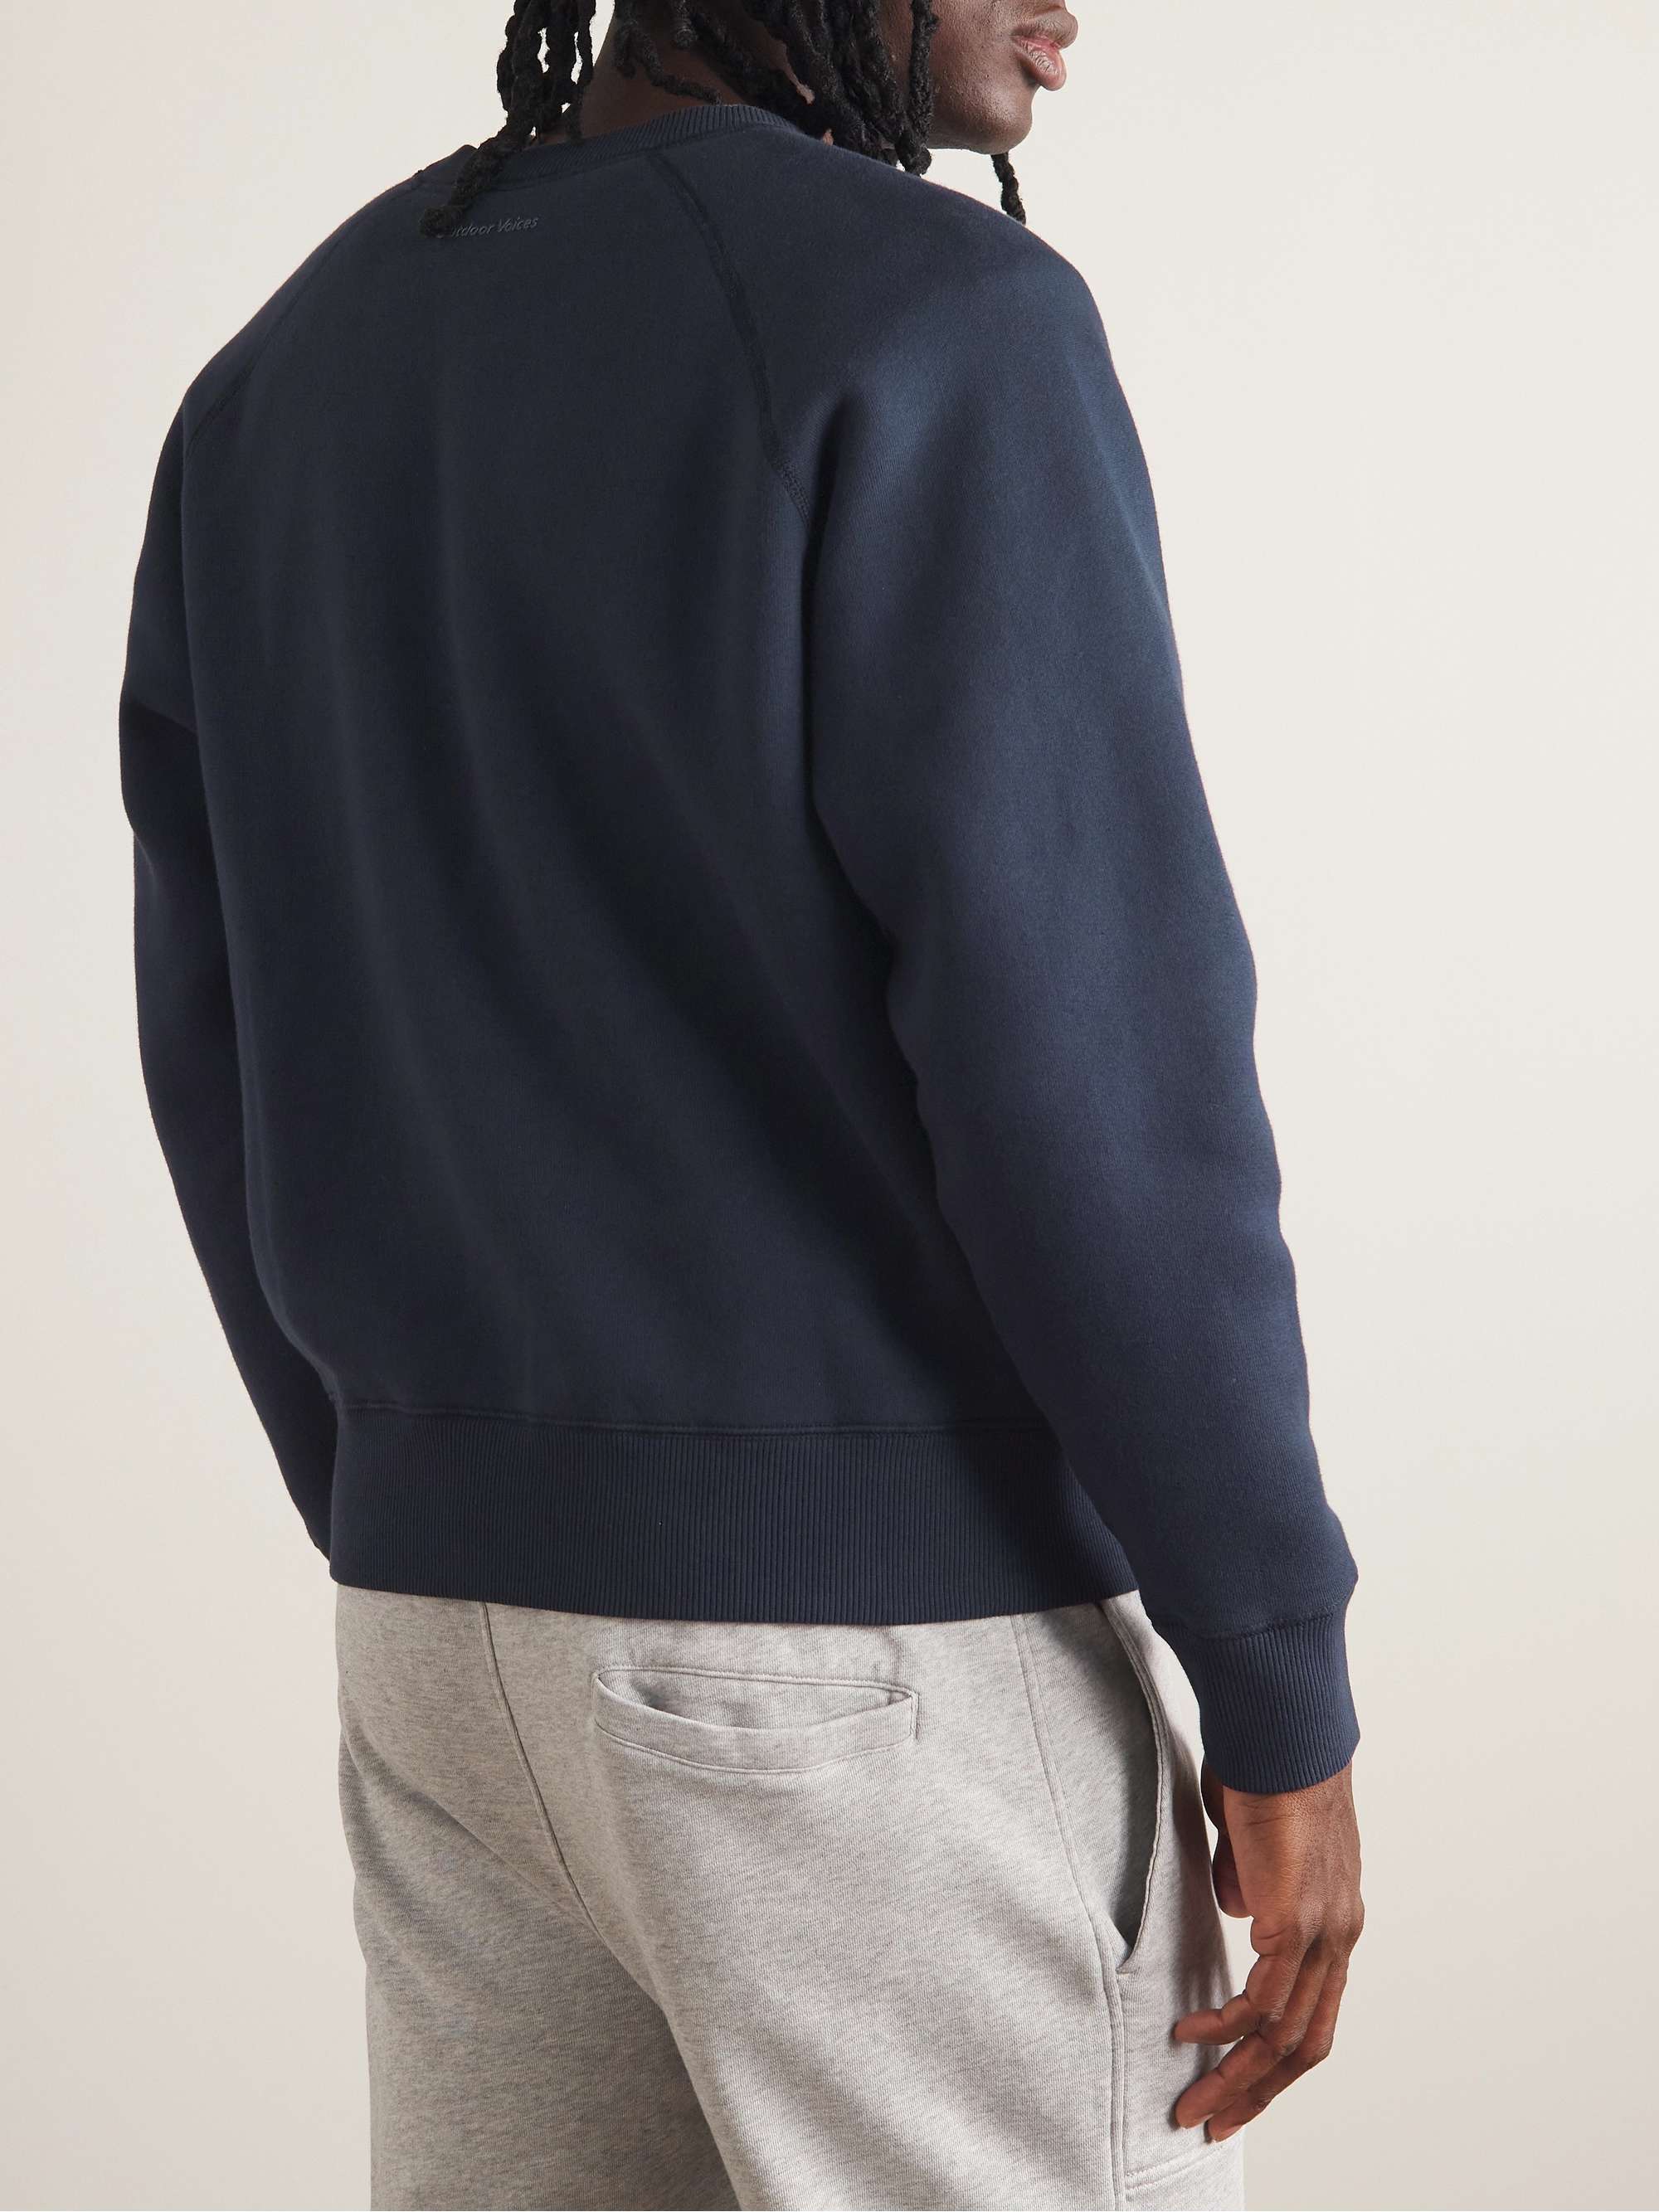 OUTDOOR VOICES Nimbus Cotton-Jersey Sweatshirt